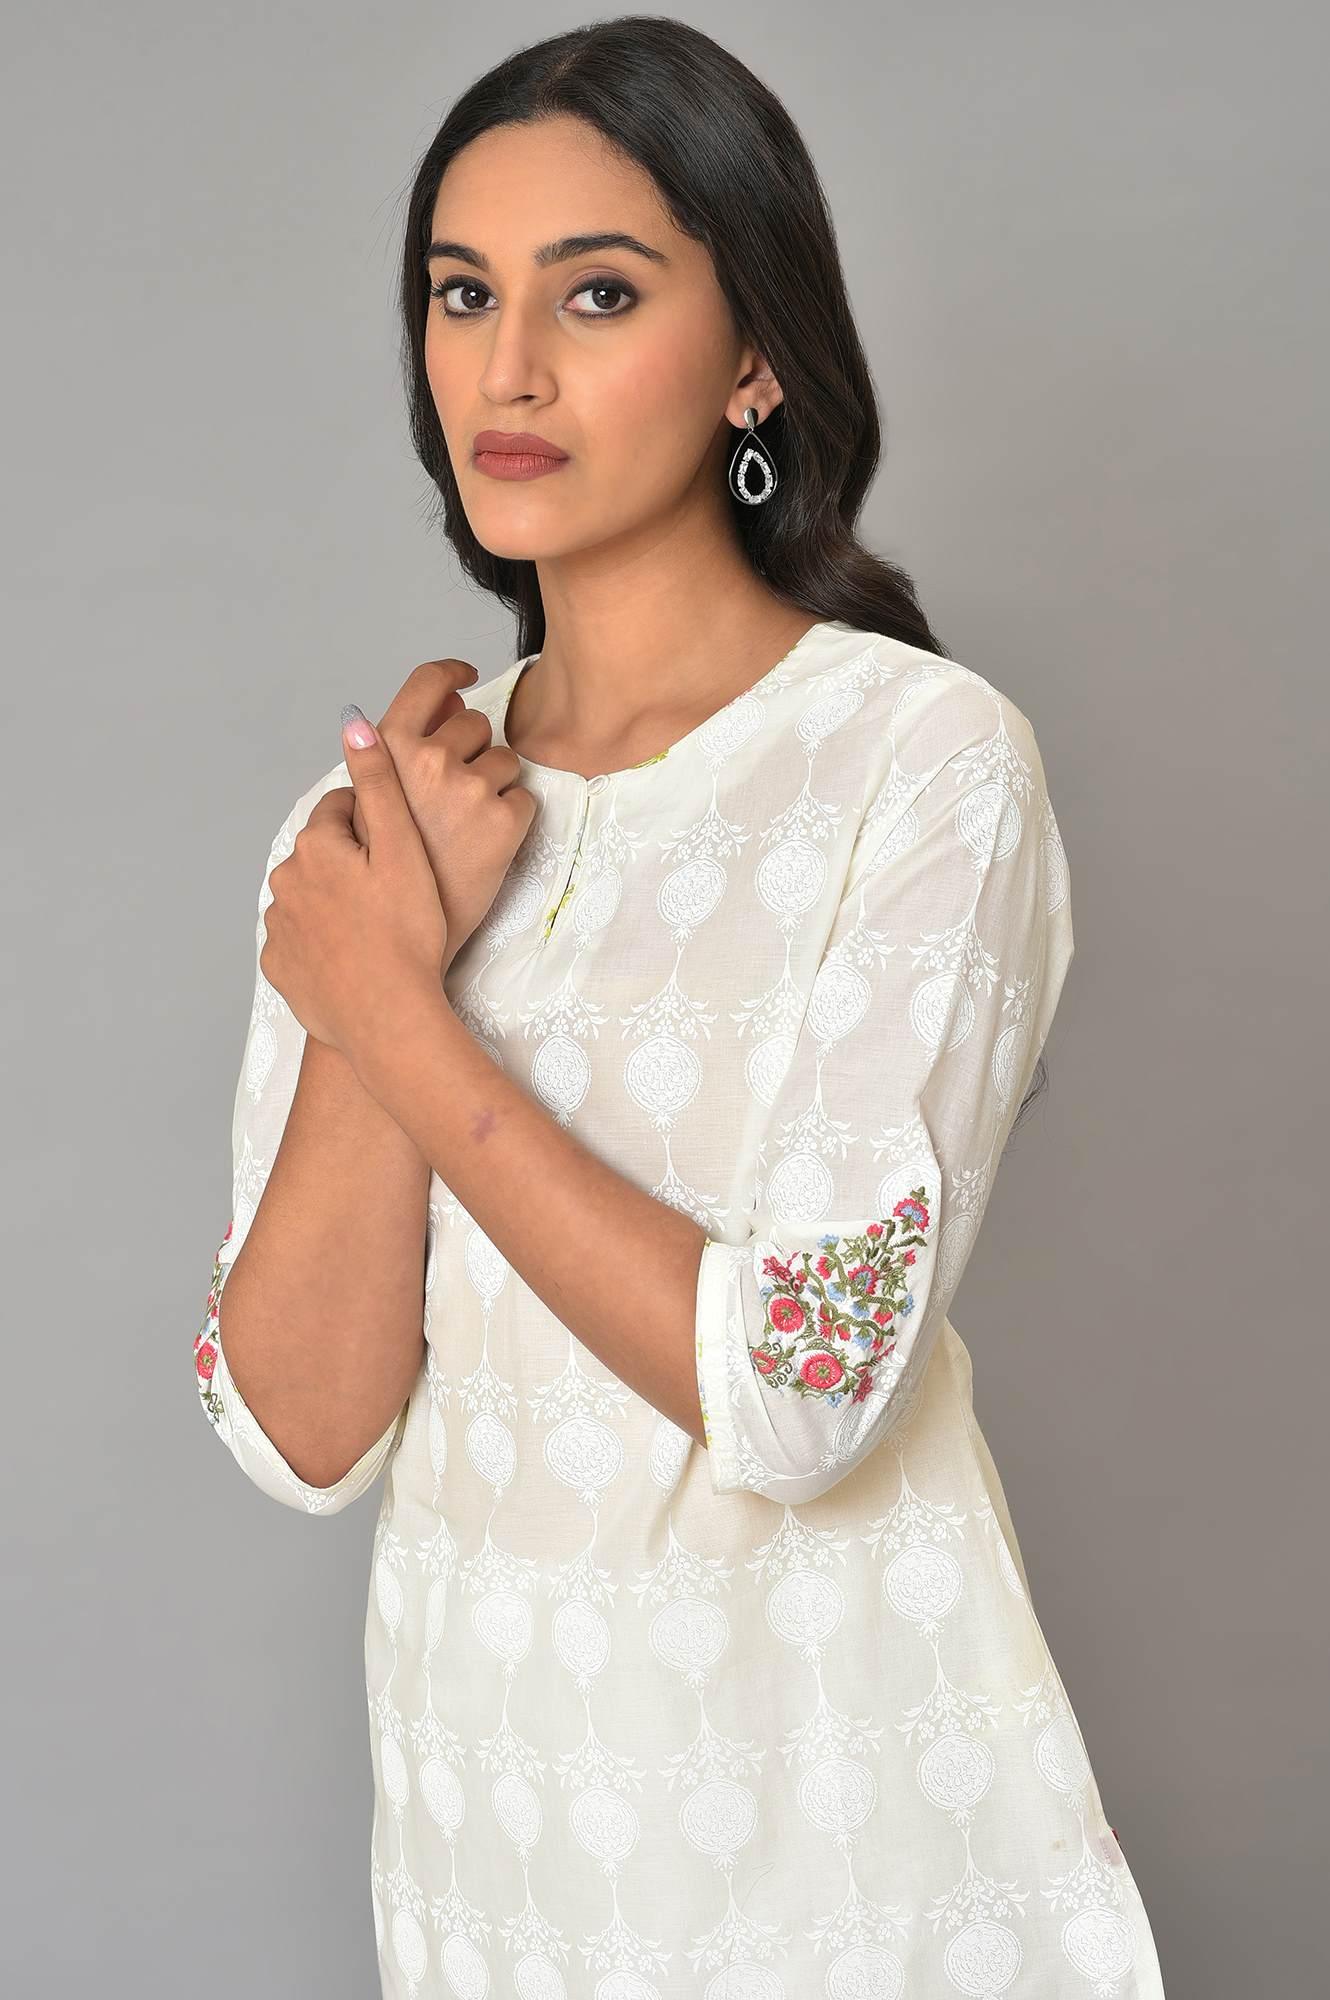 White Embroidered kurta And Pants Co-Ord Sets - wforwoman